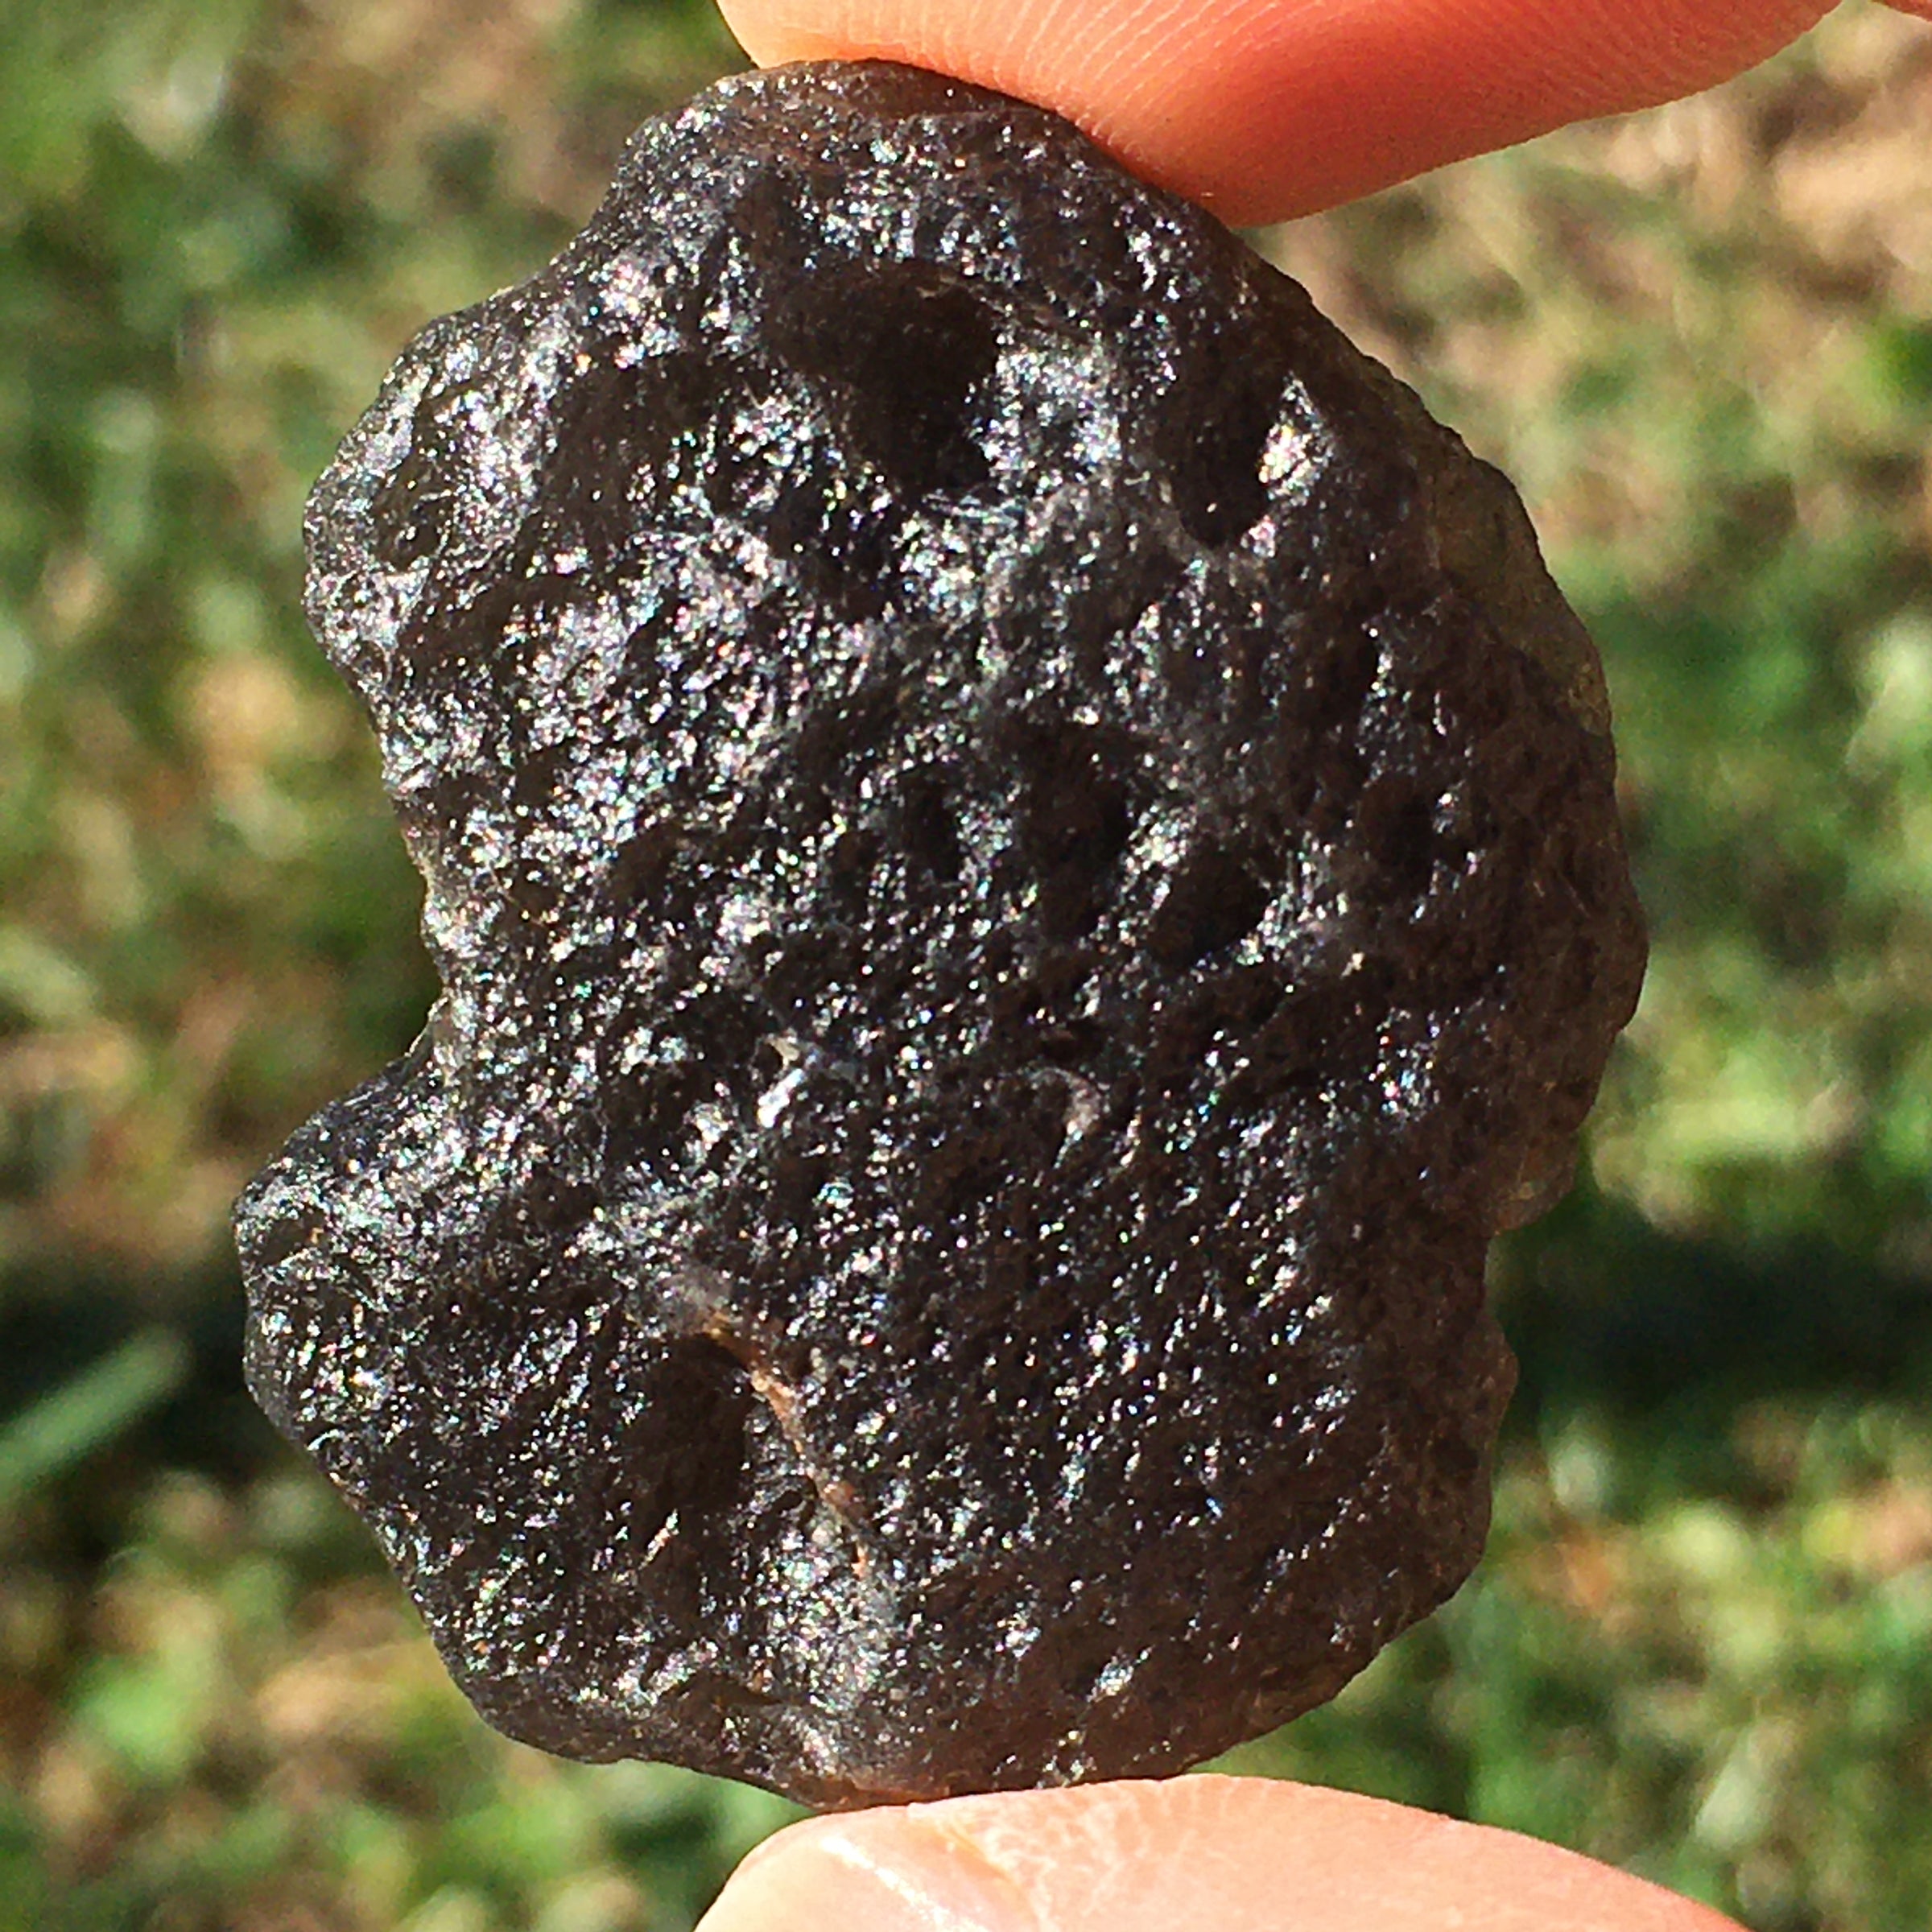 Pearl of Fire Agni Manitite Tektite 21.3 grams-Moldavite Life